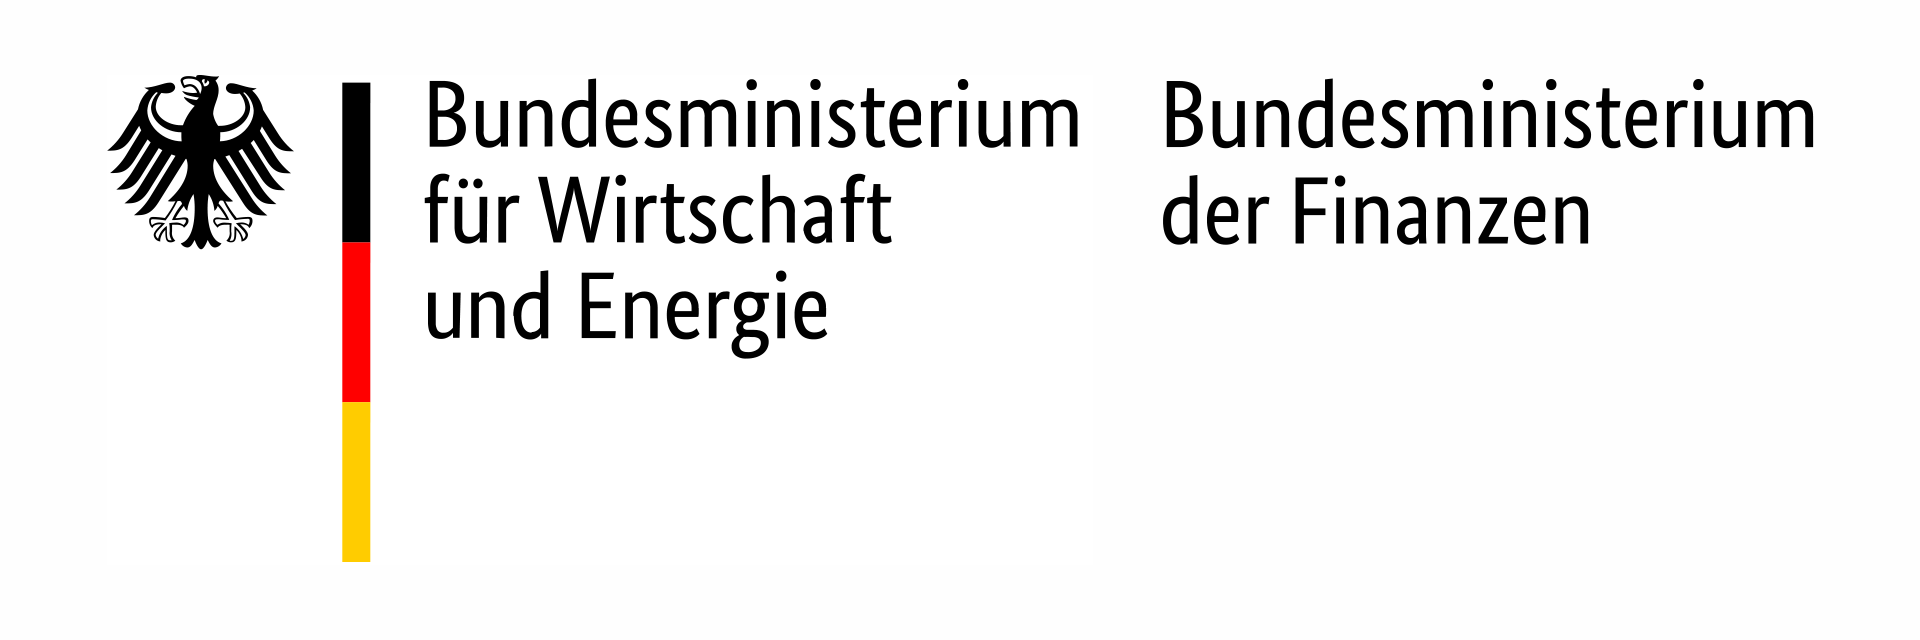 Bundesministerium Logo 1 - 1920x 640 Pixel